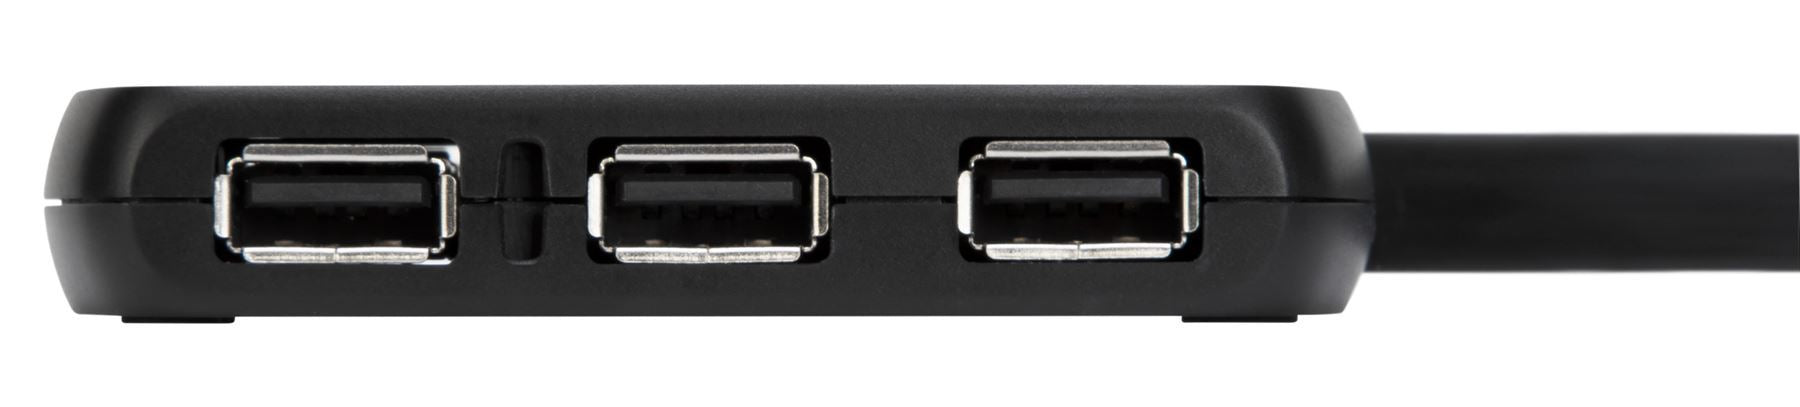 Targus 4 Port USB Hub Black | Laptop Accessories | Halabh.com